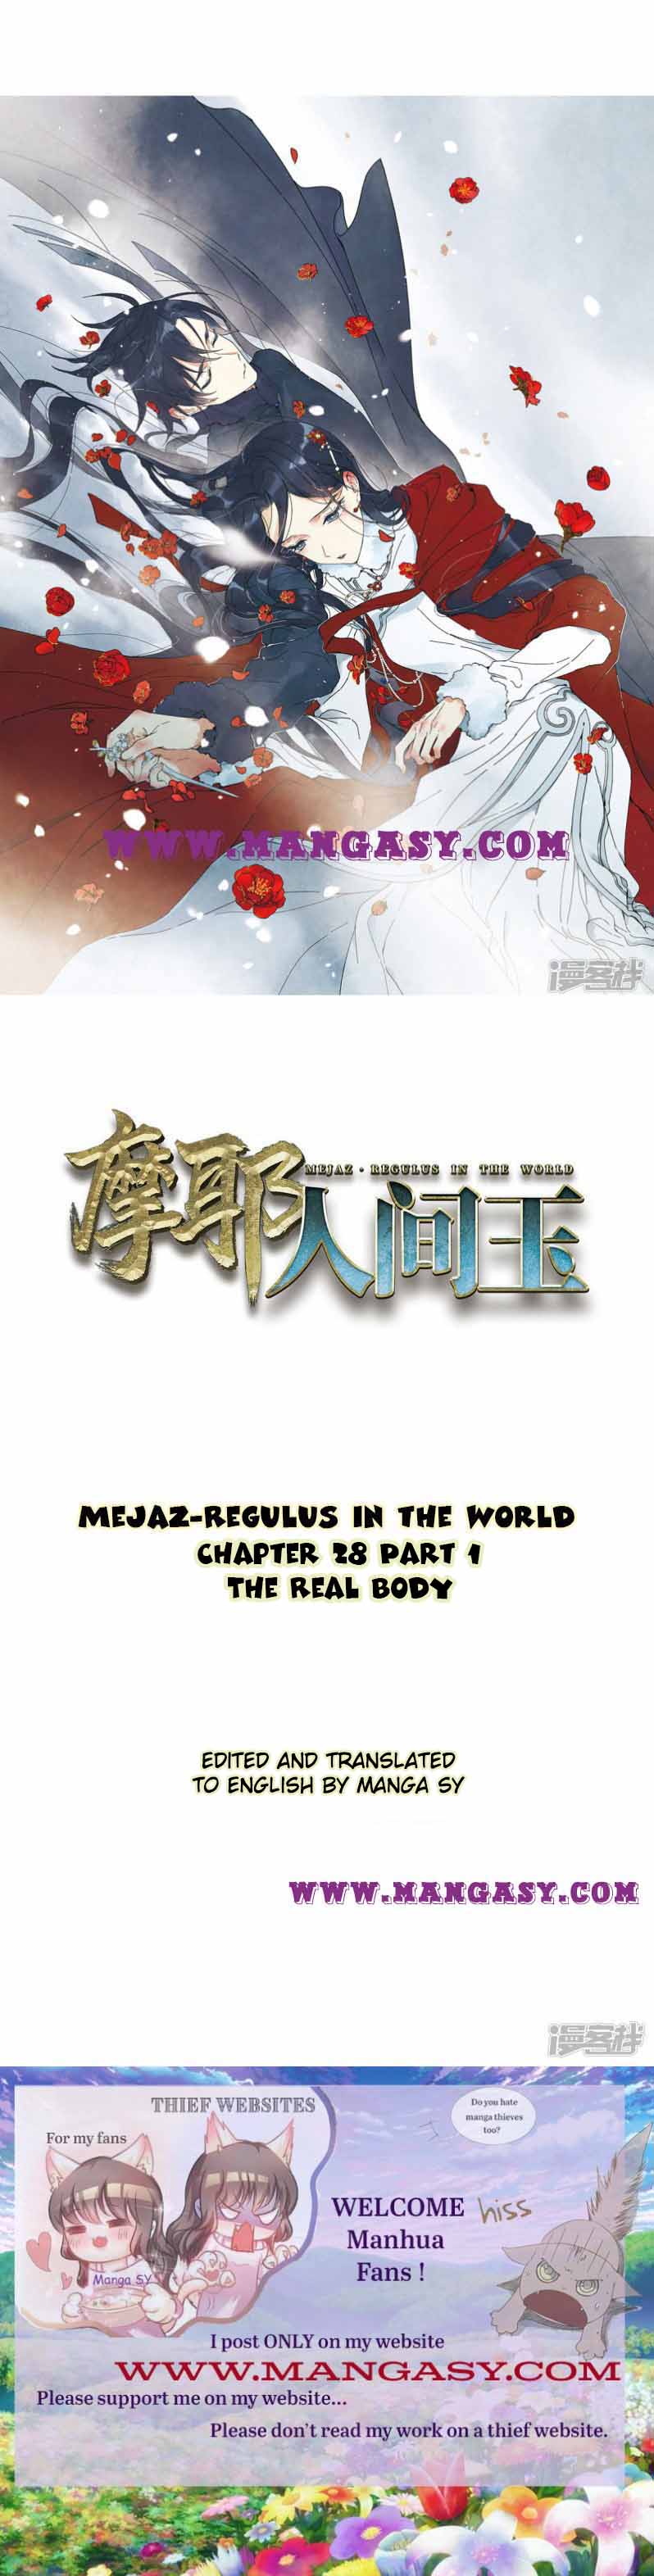 Mejaz - Regulus In The World Chapter 28